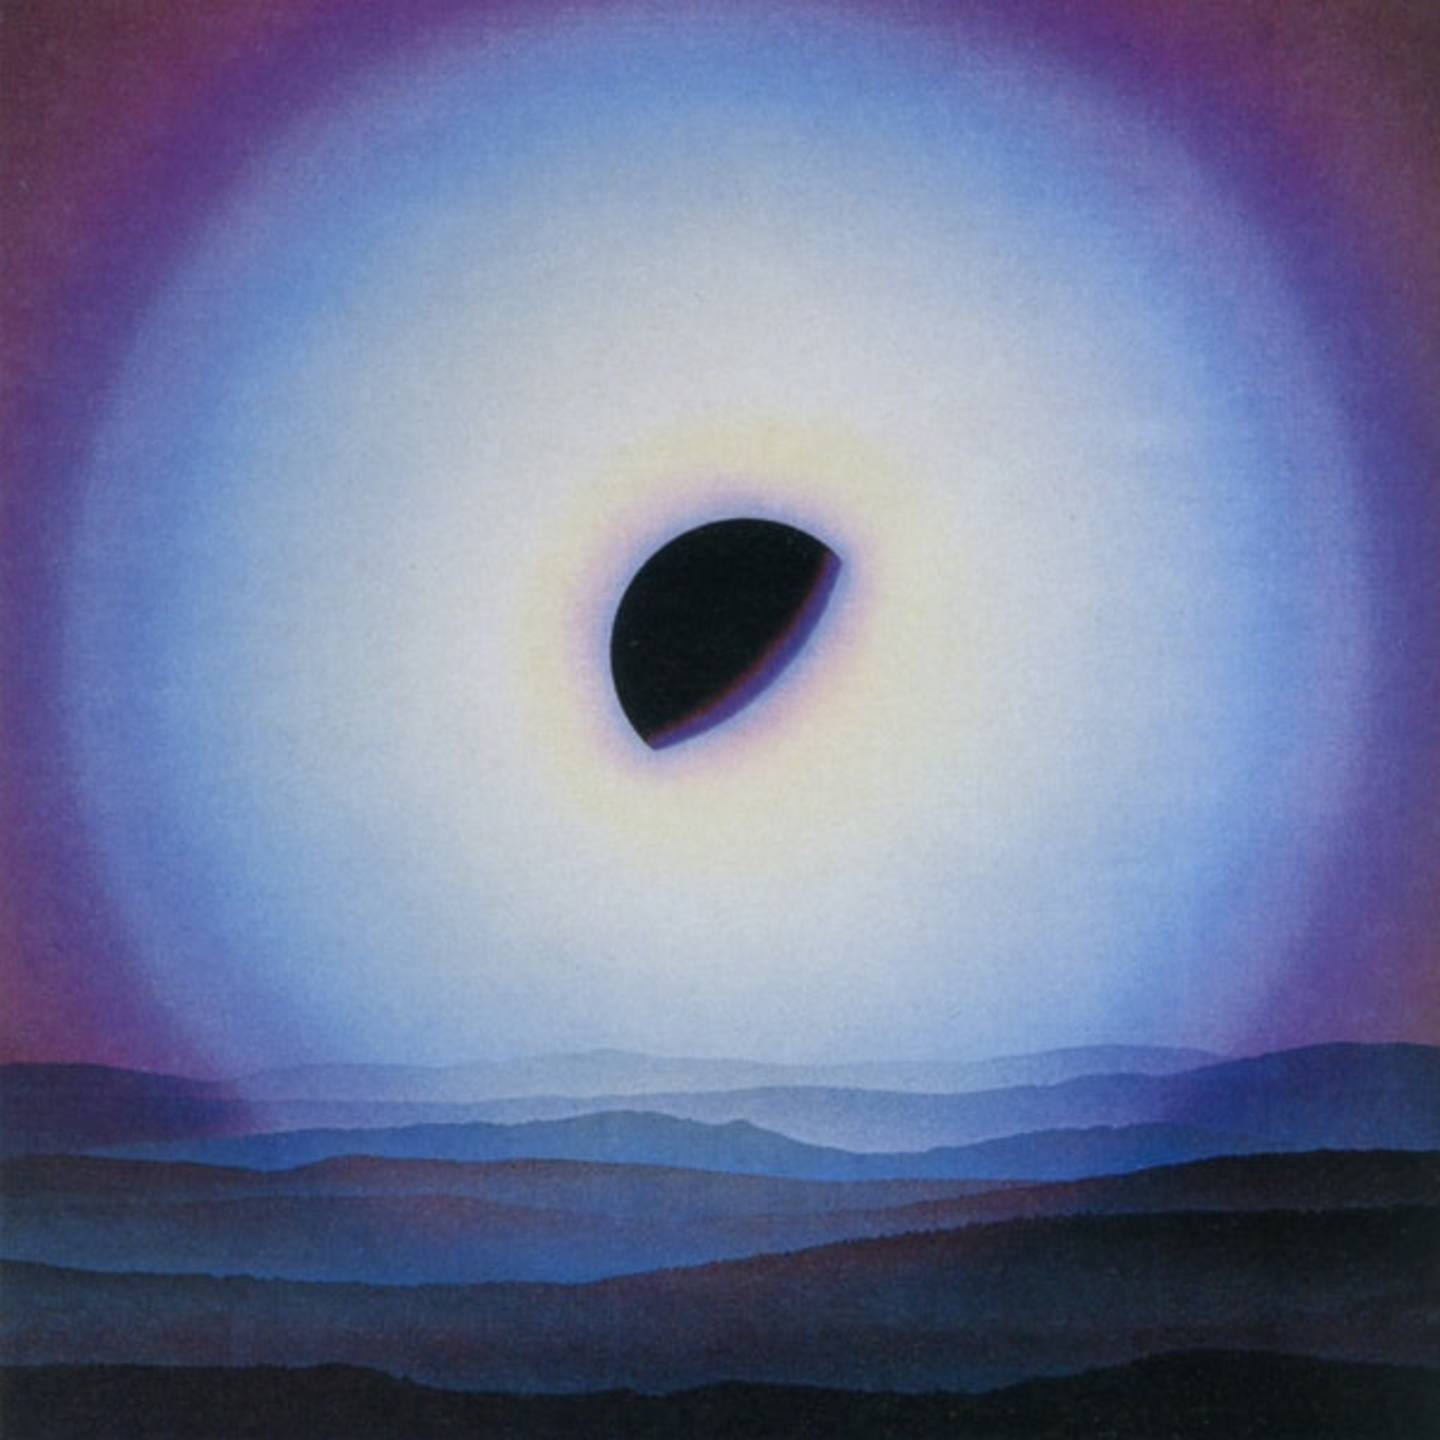 VA - Somewhere Between Mutant Pop, Electronic Minimalism & Shadow Sounds of Japan 1980-1988 2xLP Purple Cornetto Vinyl